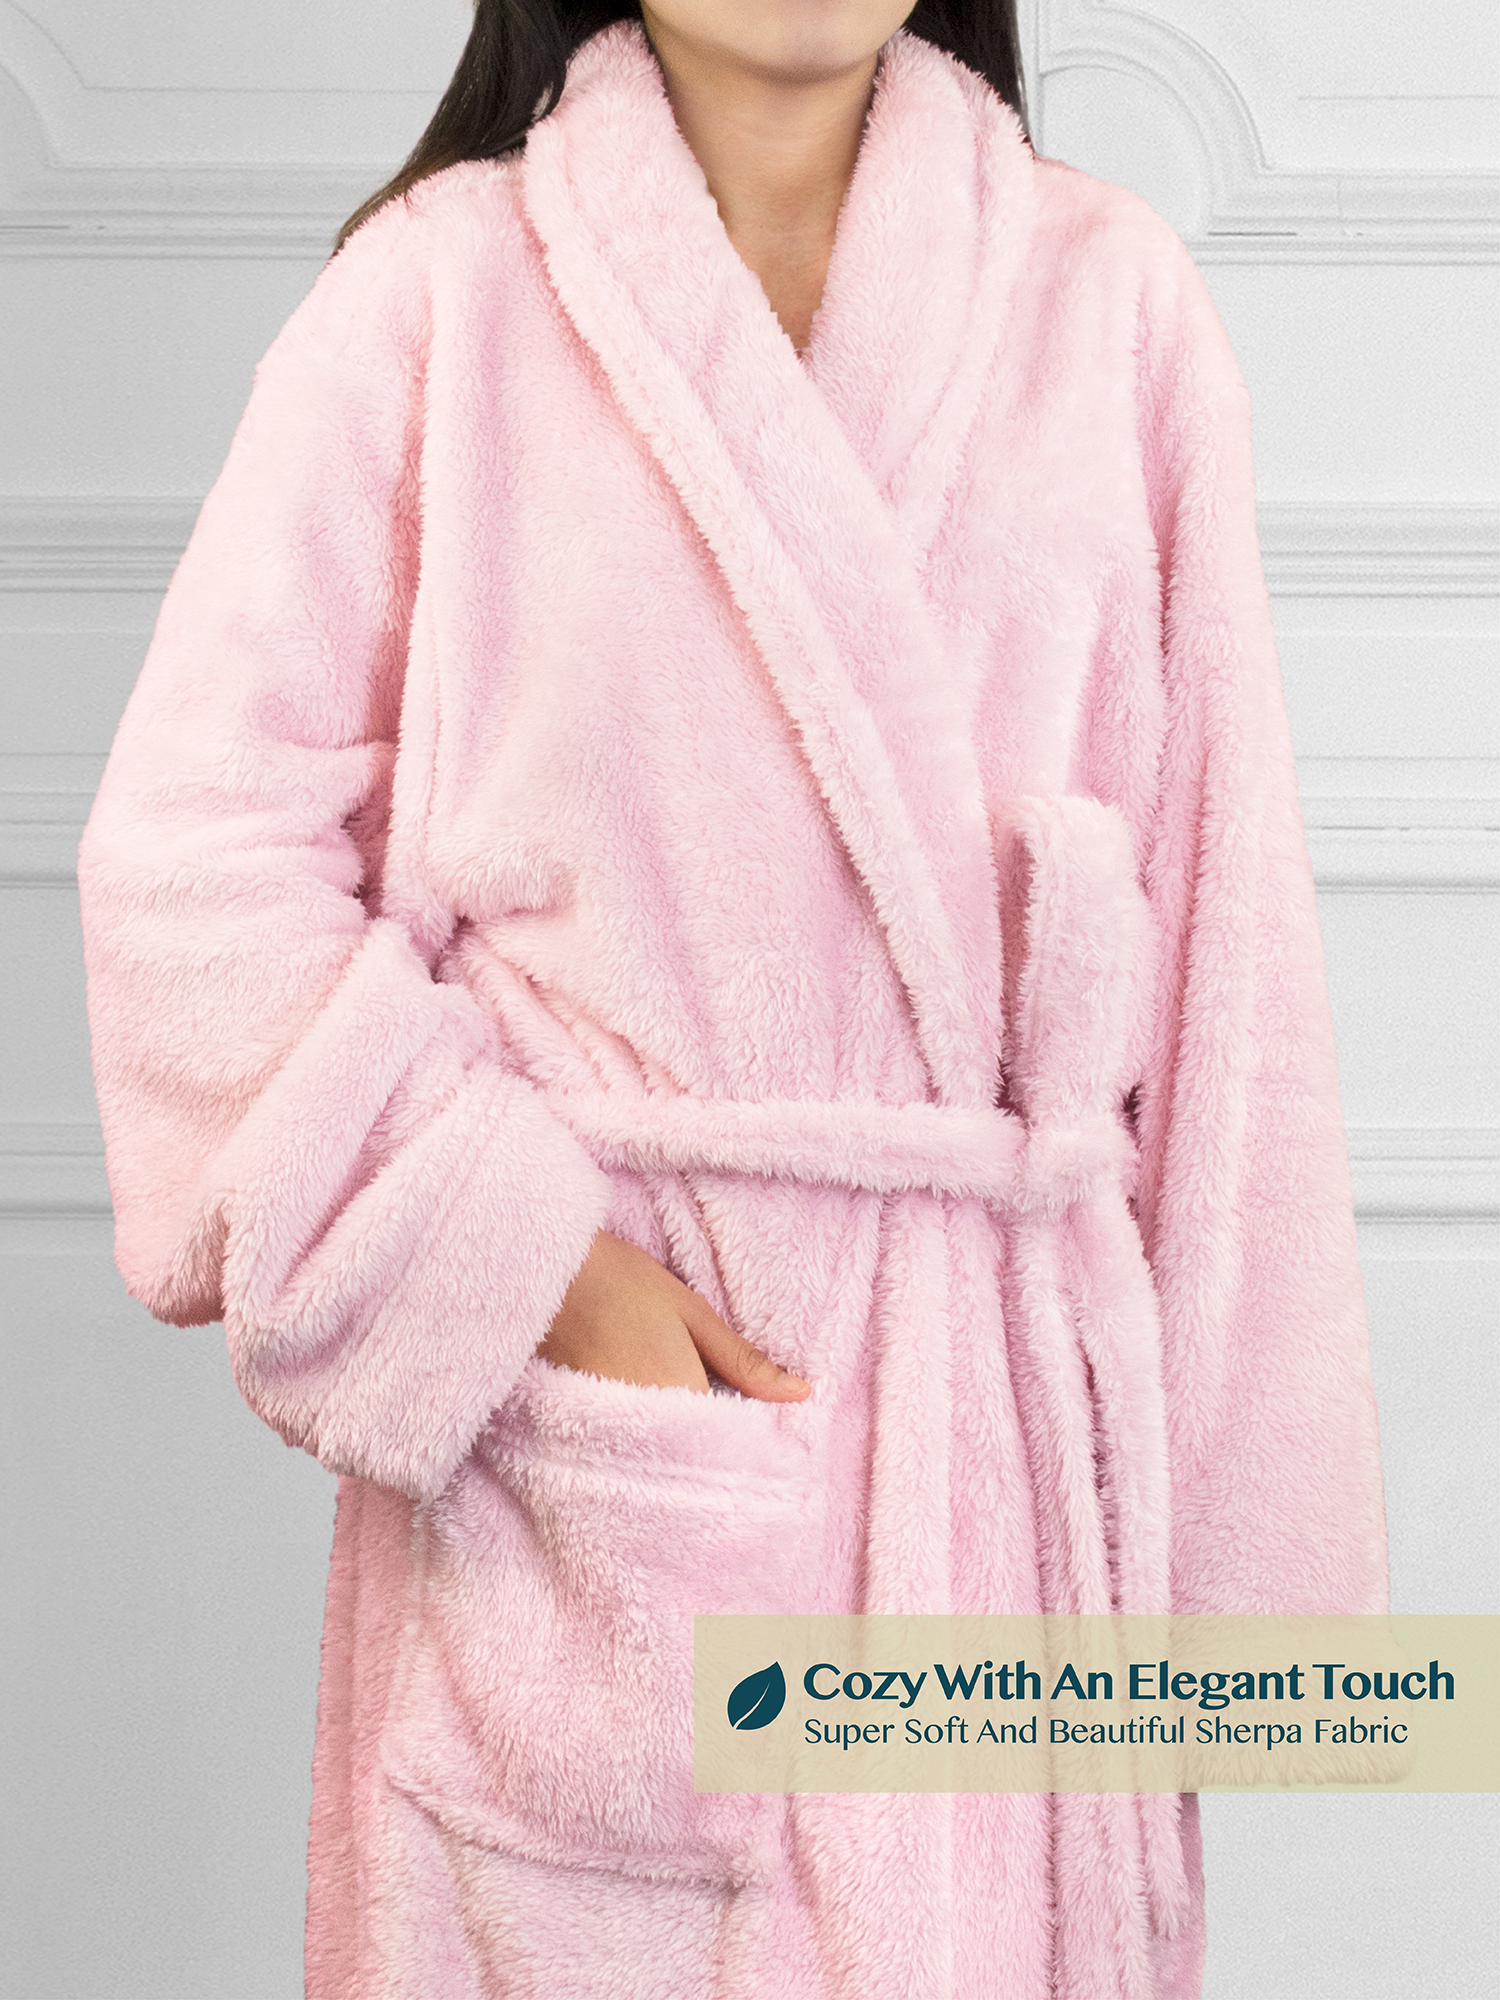 Buy Pink Plush Robe Luxury Personalized Bathrobe Women's Online in India 